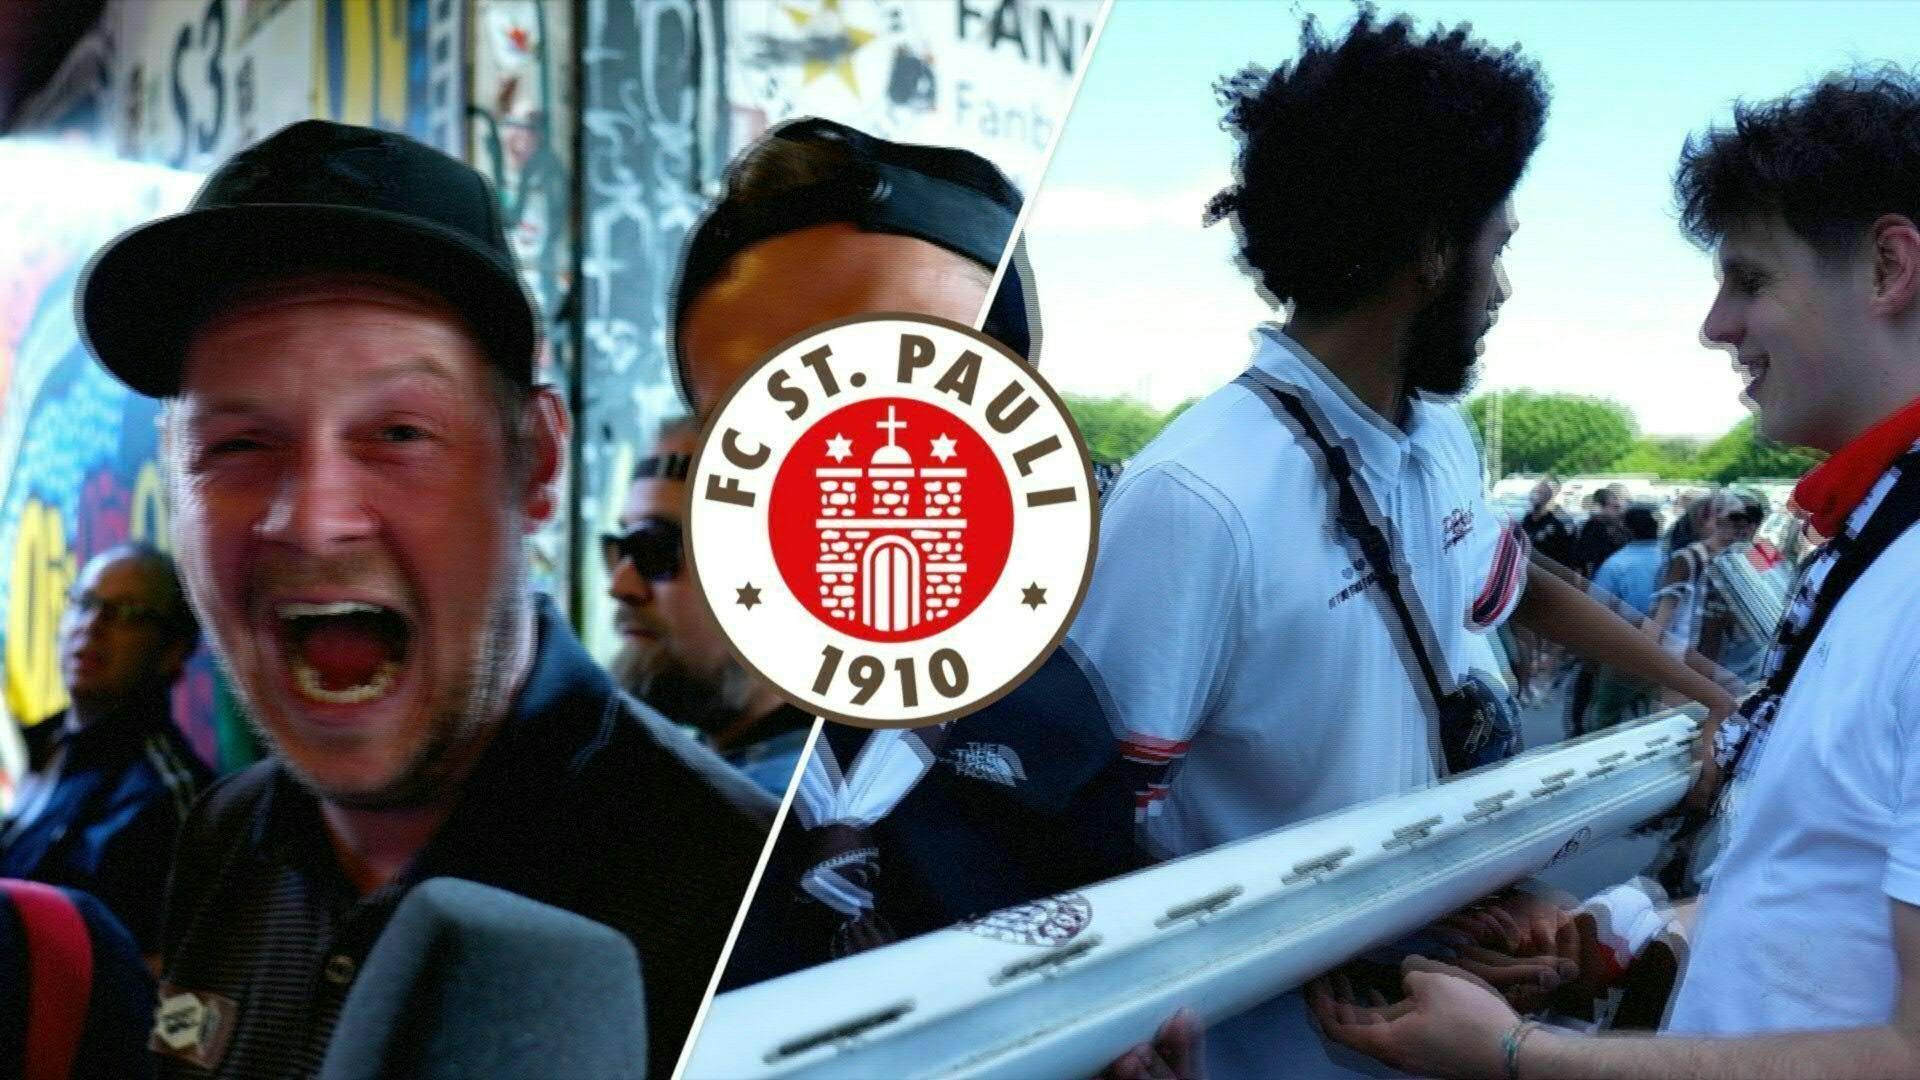 St. Pauli feiert Aufstieg - Fans nehmen Torlatte mit